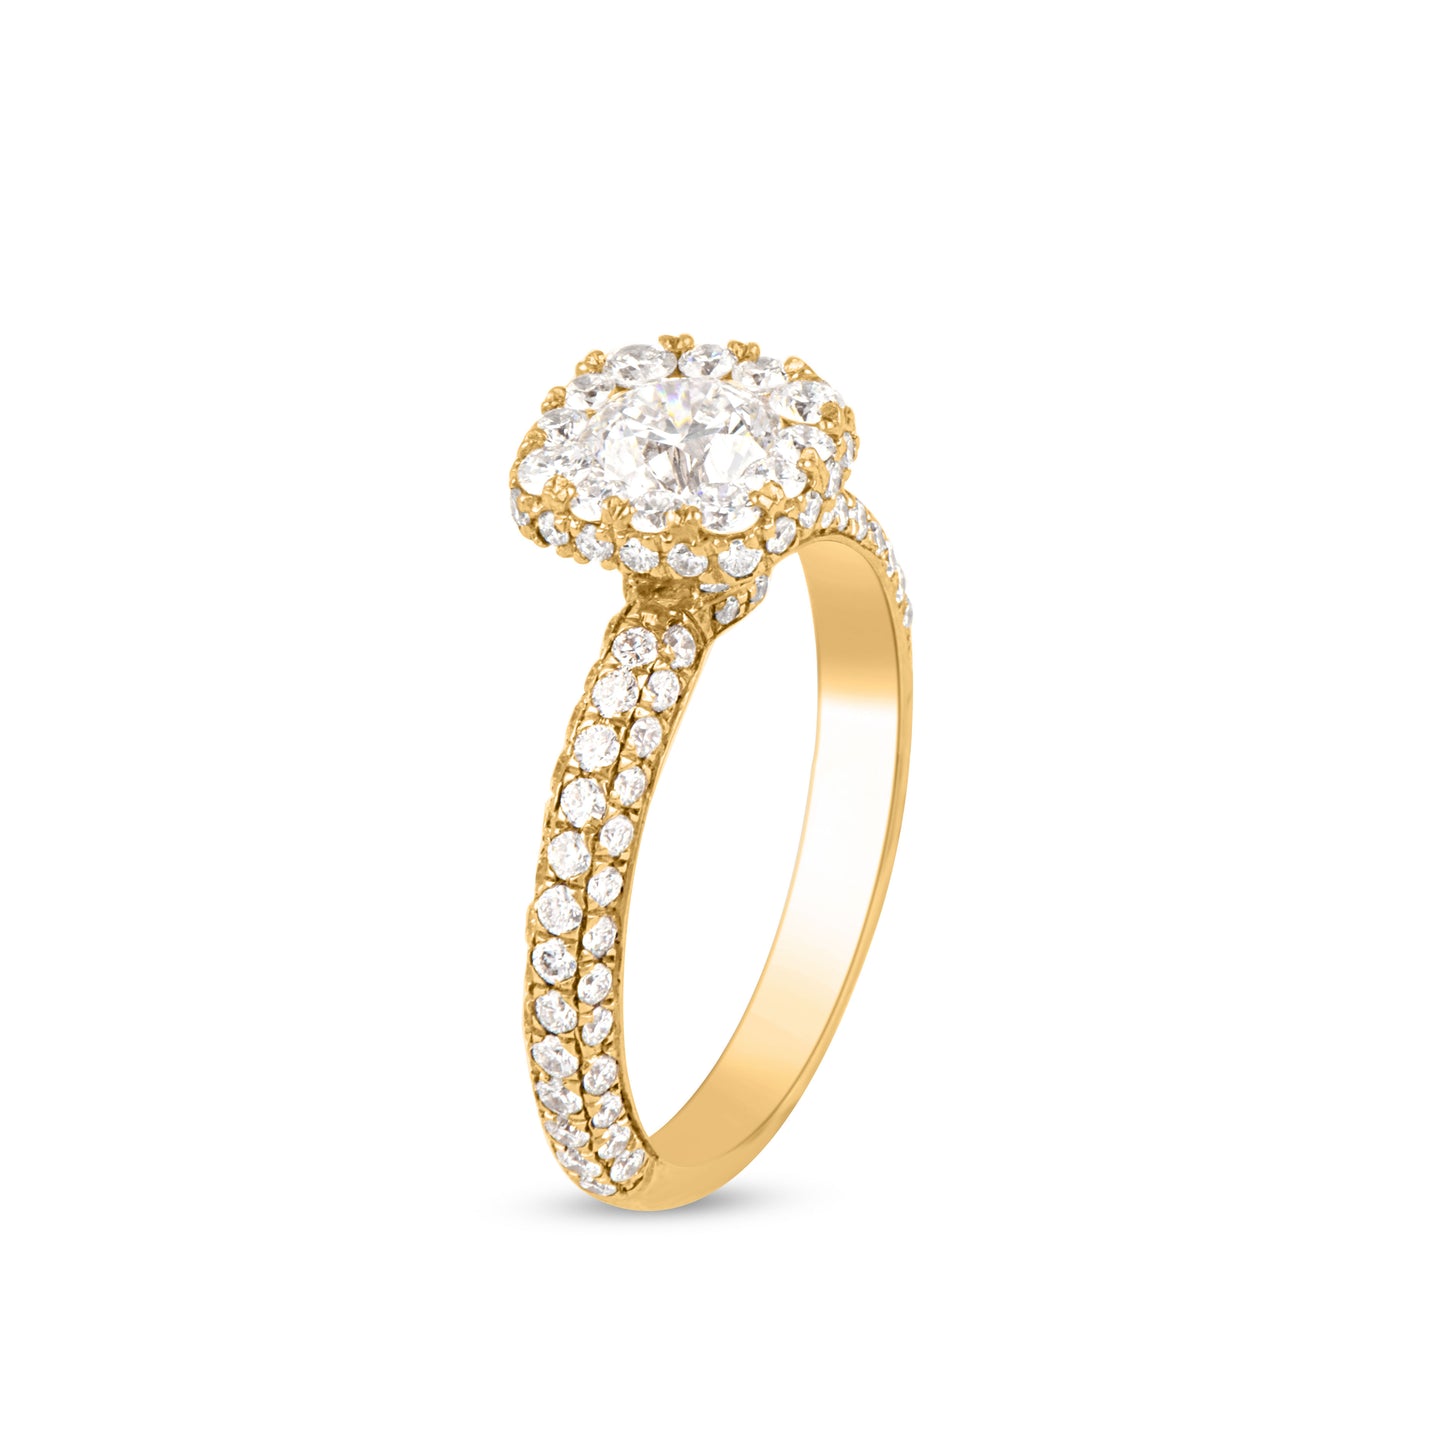 Halo Wedding Ring in 14K Gold